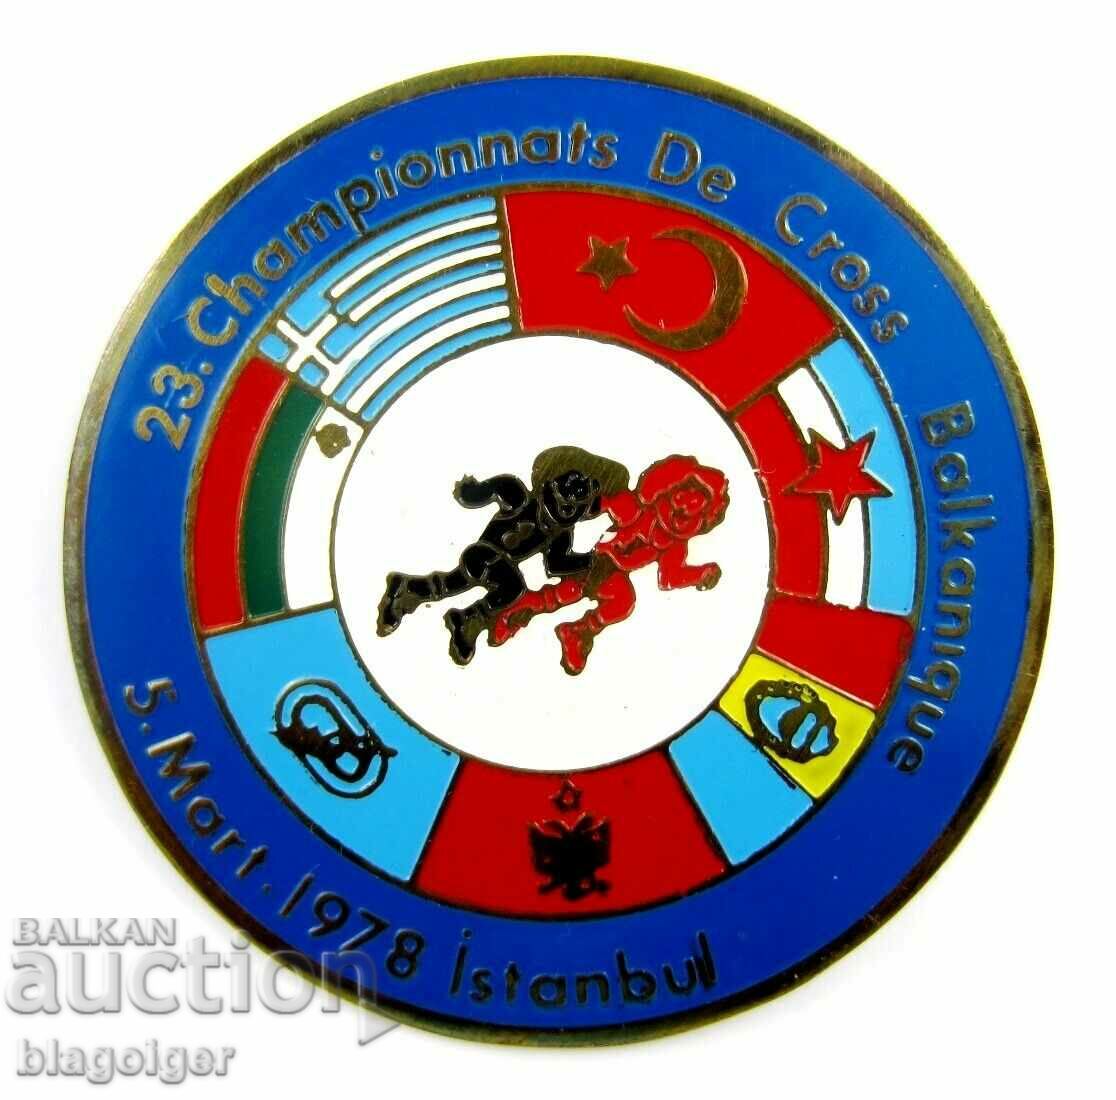 Balcaniad-Jocuri Balcanice-Cross Championship-1978-Istanbul